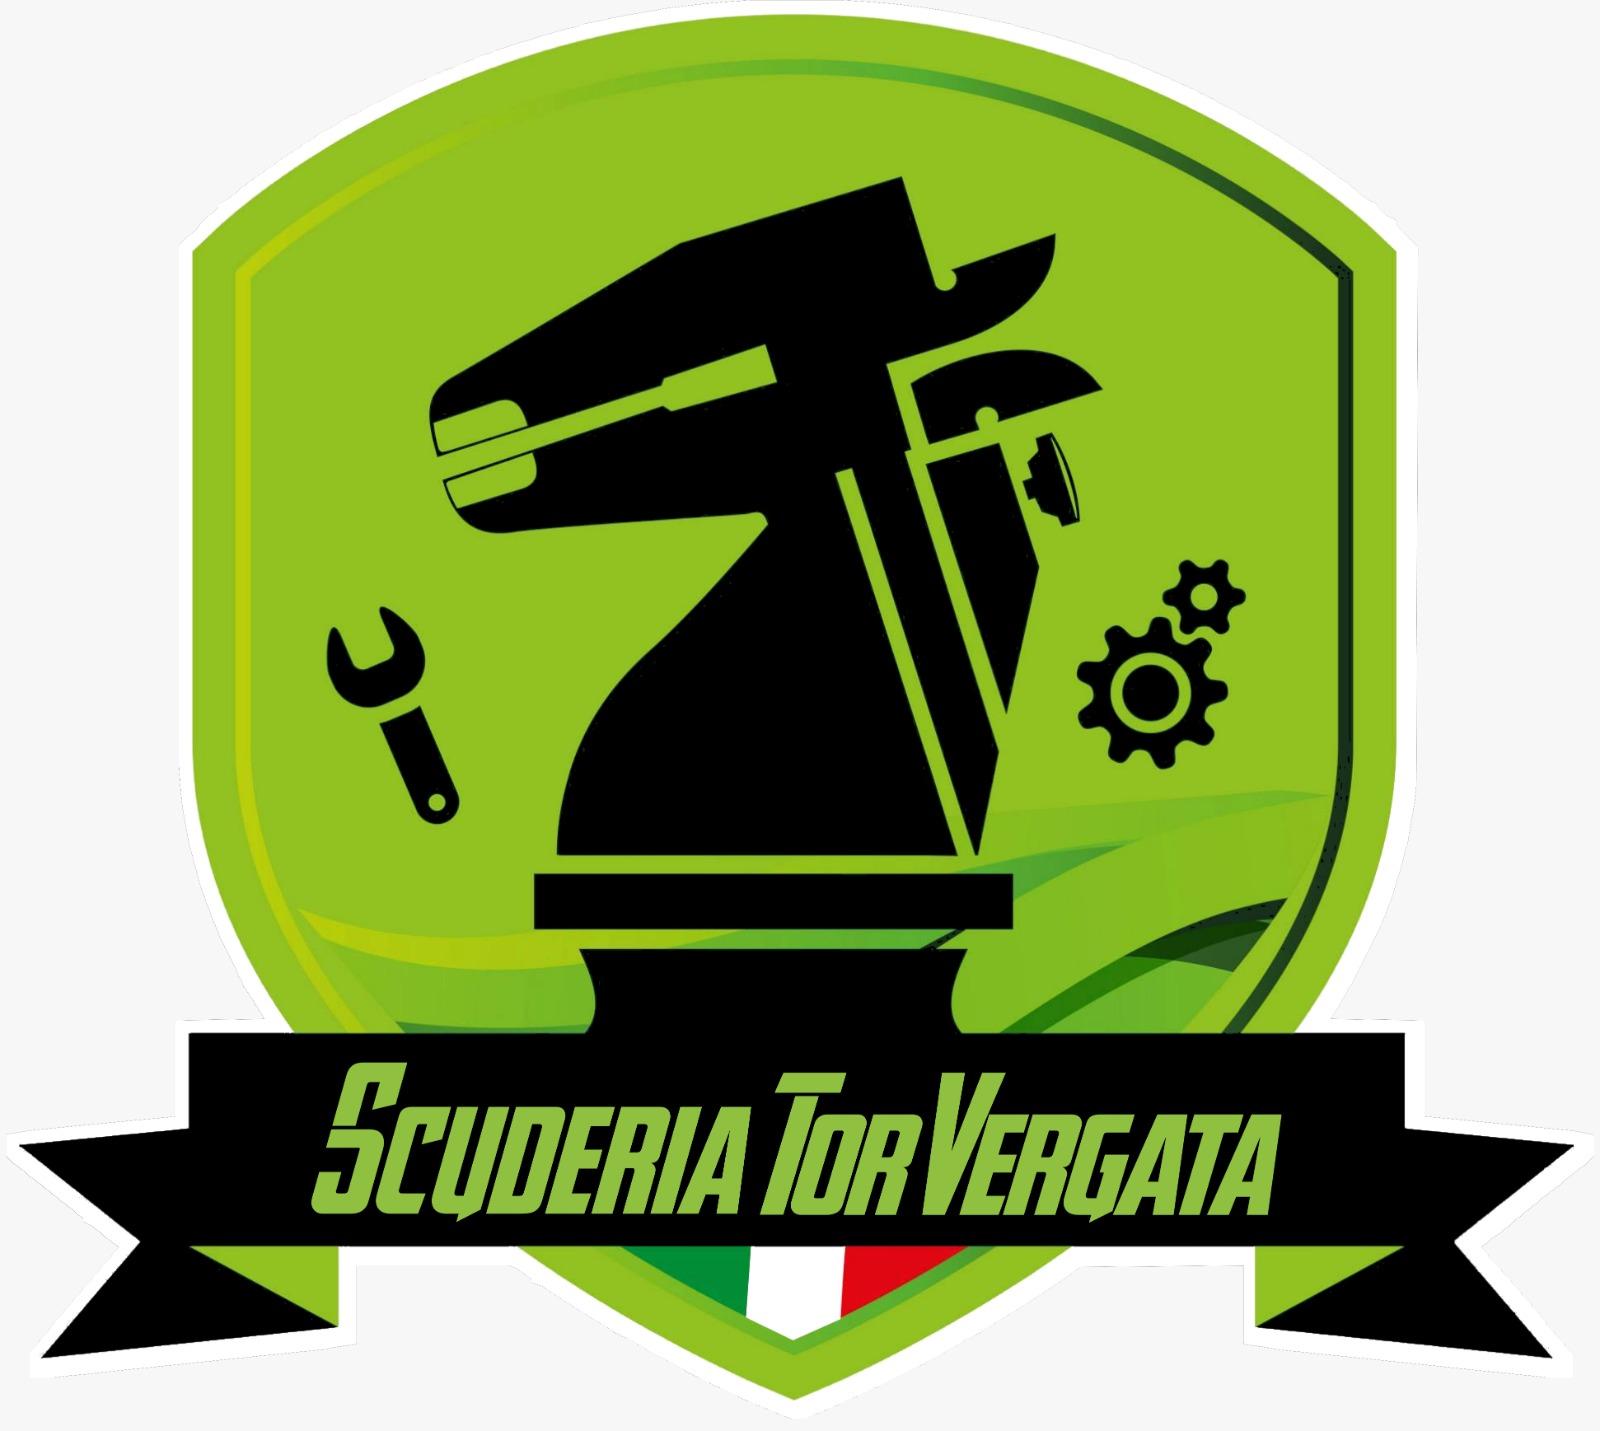 Scuderia Tor Vergata